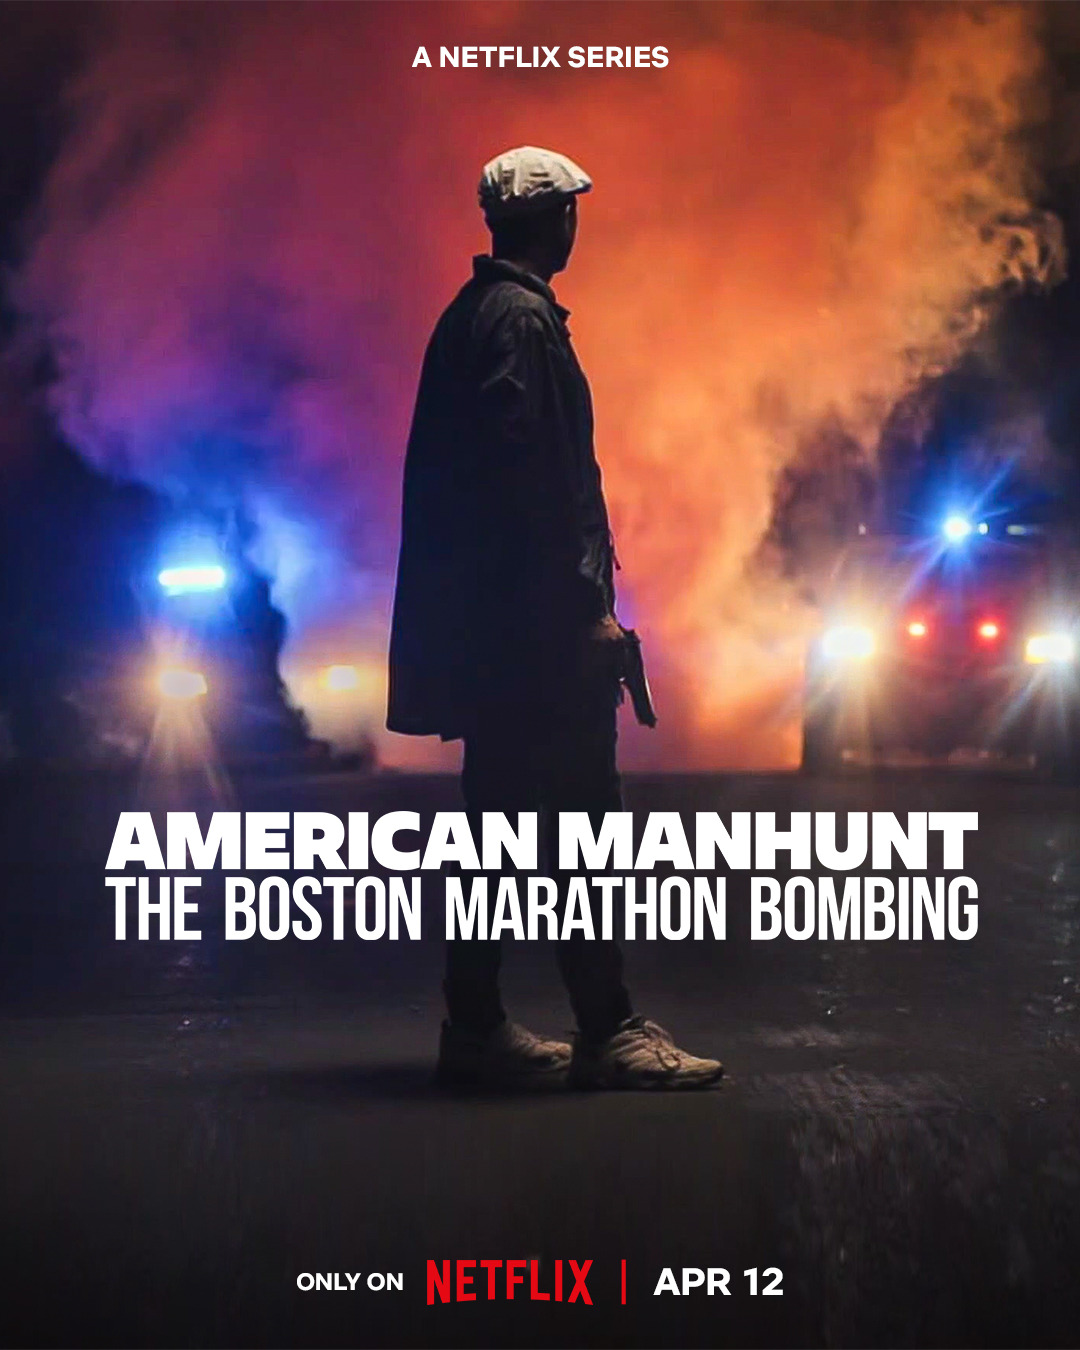 Extra Large TV Poster Image for American Manhunt: The Boston Marathon Bombing 